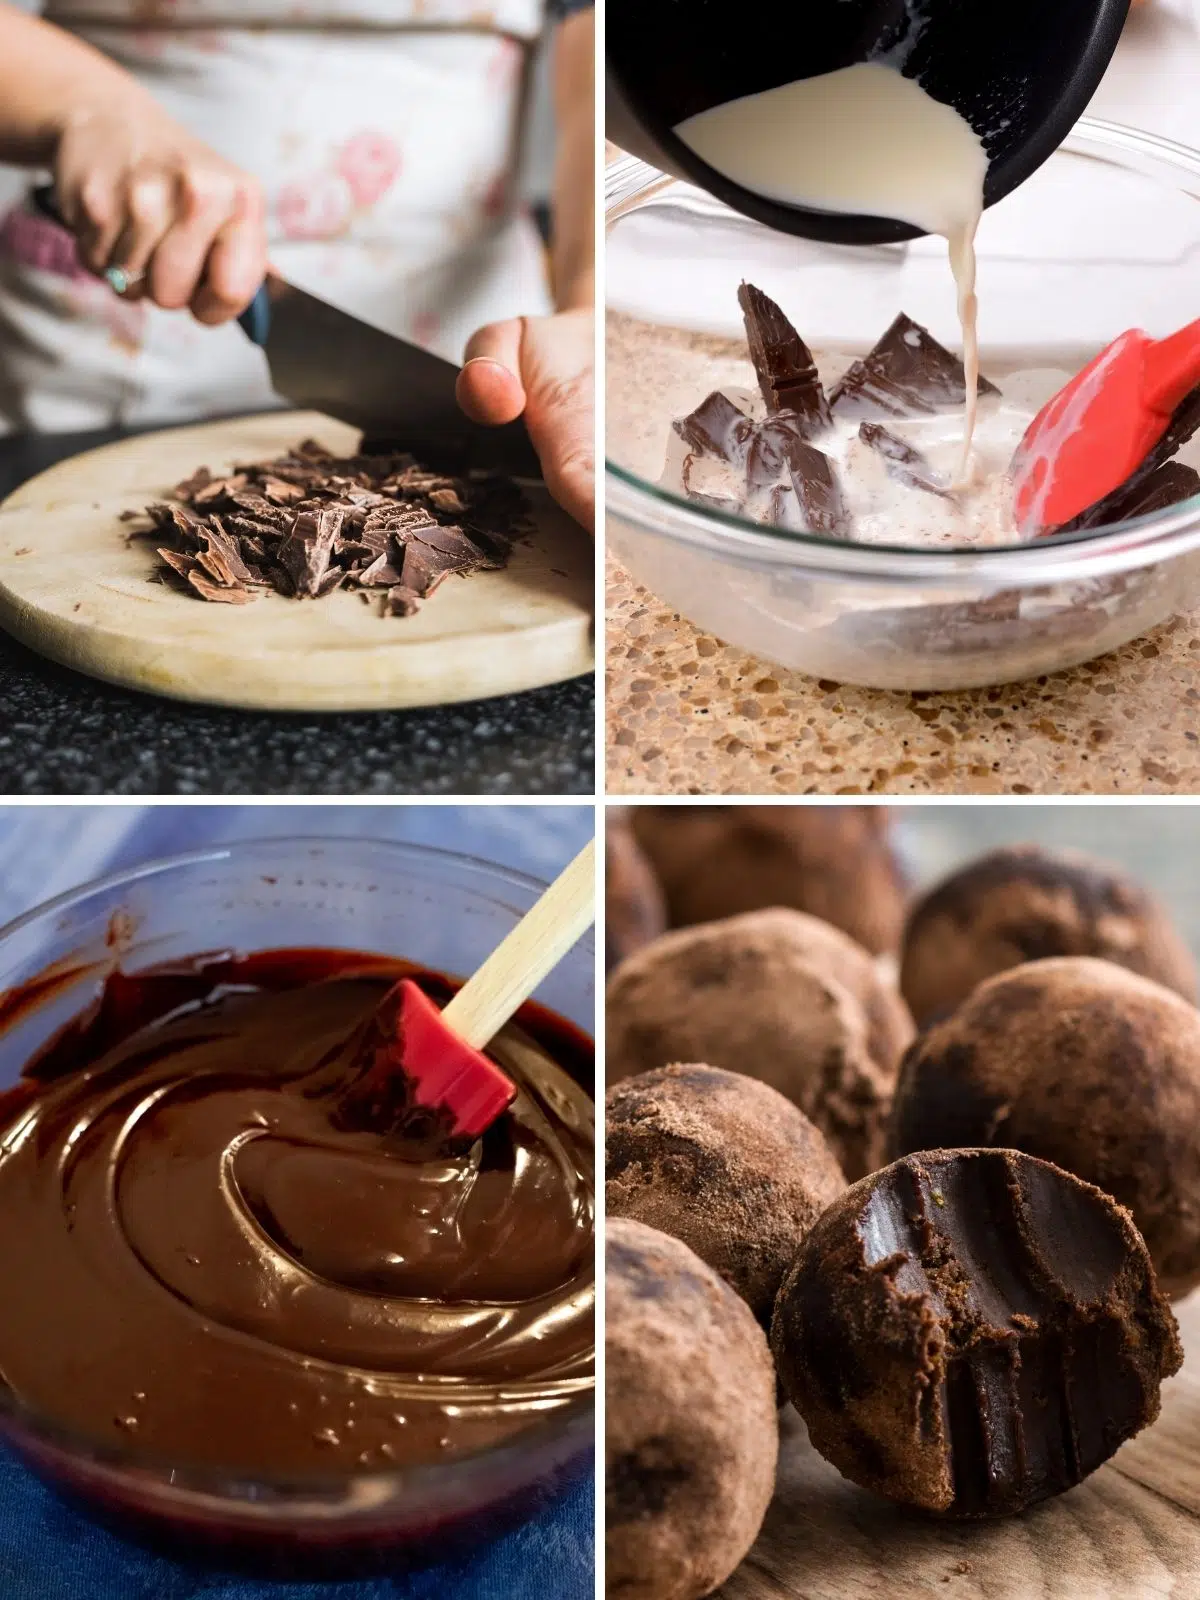 keto chocolate truffles step by step instructions